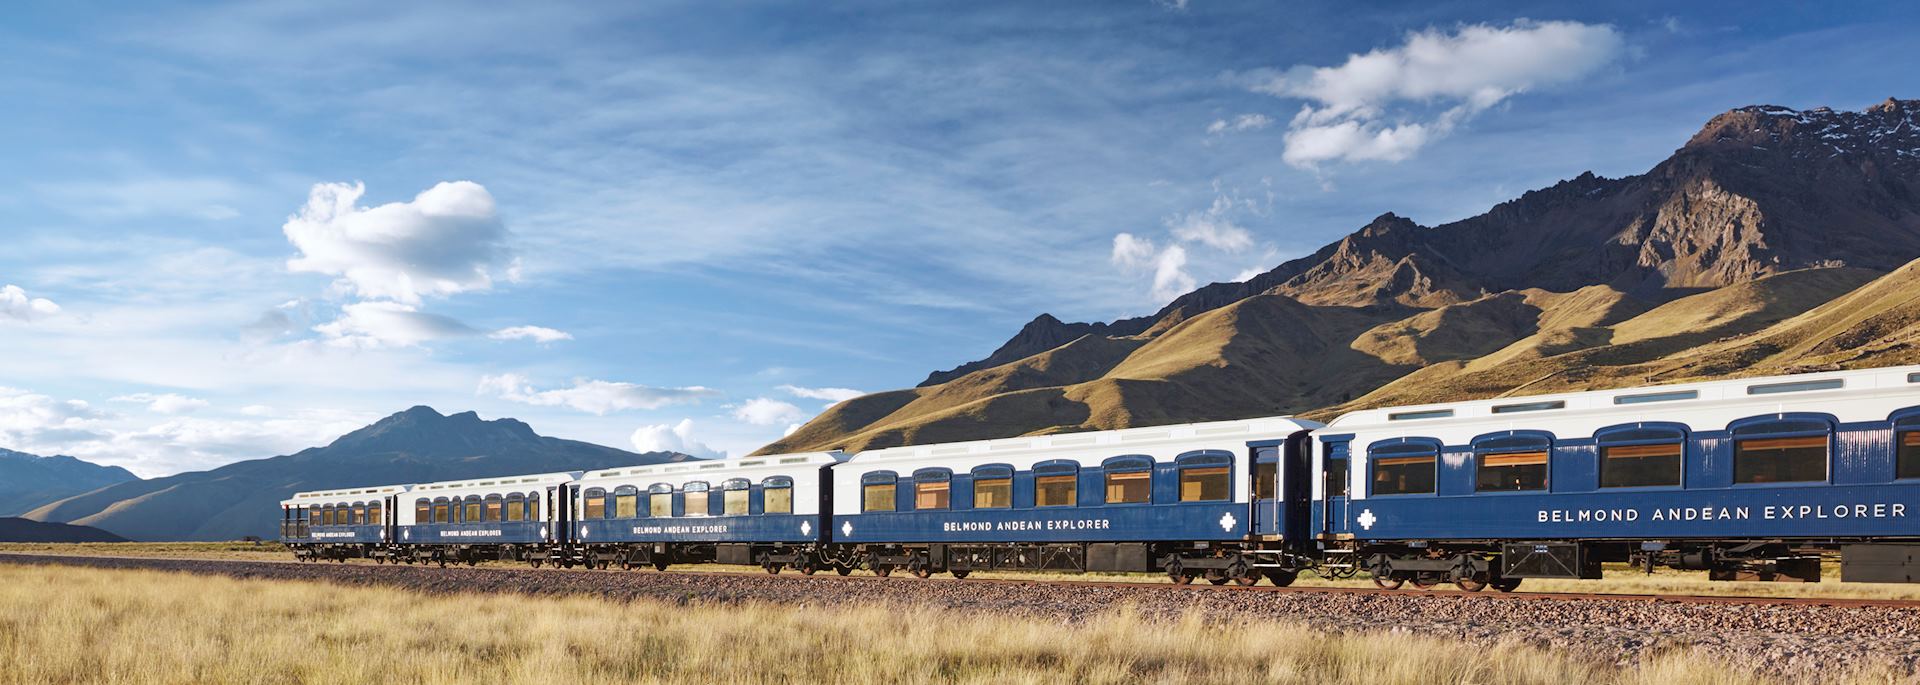 The luxurious Belmond Andean Explorer train